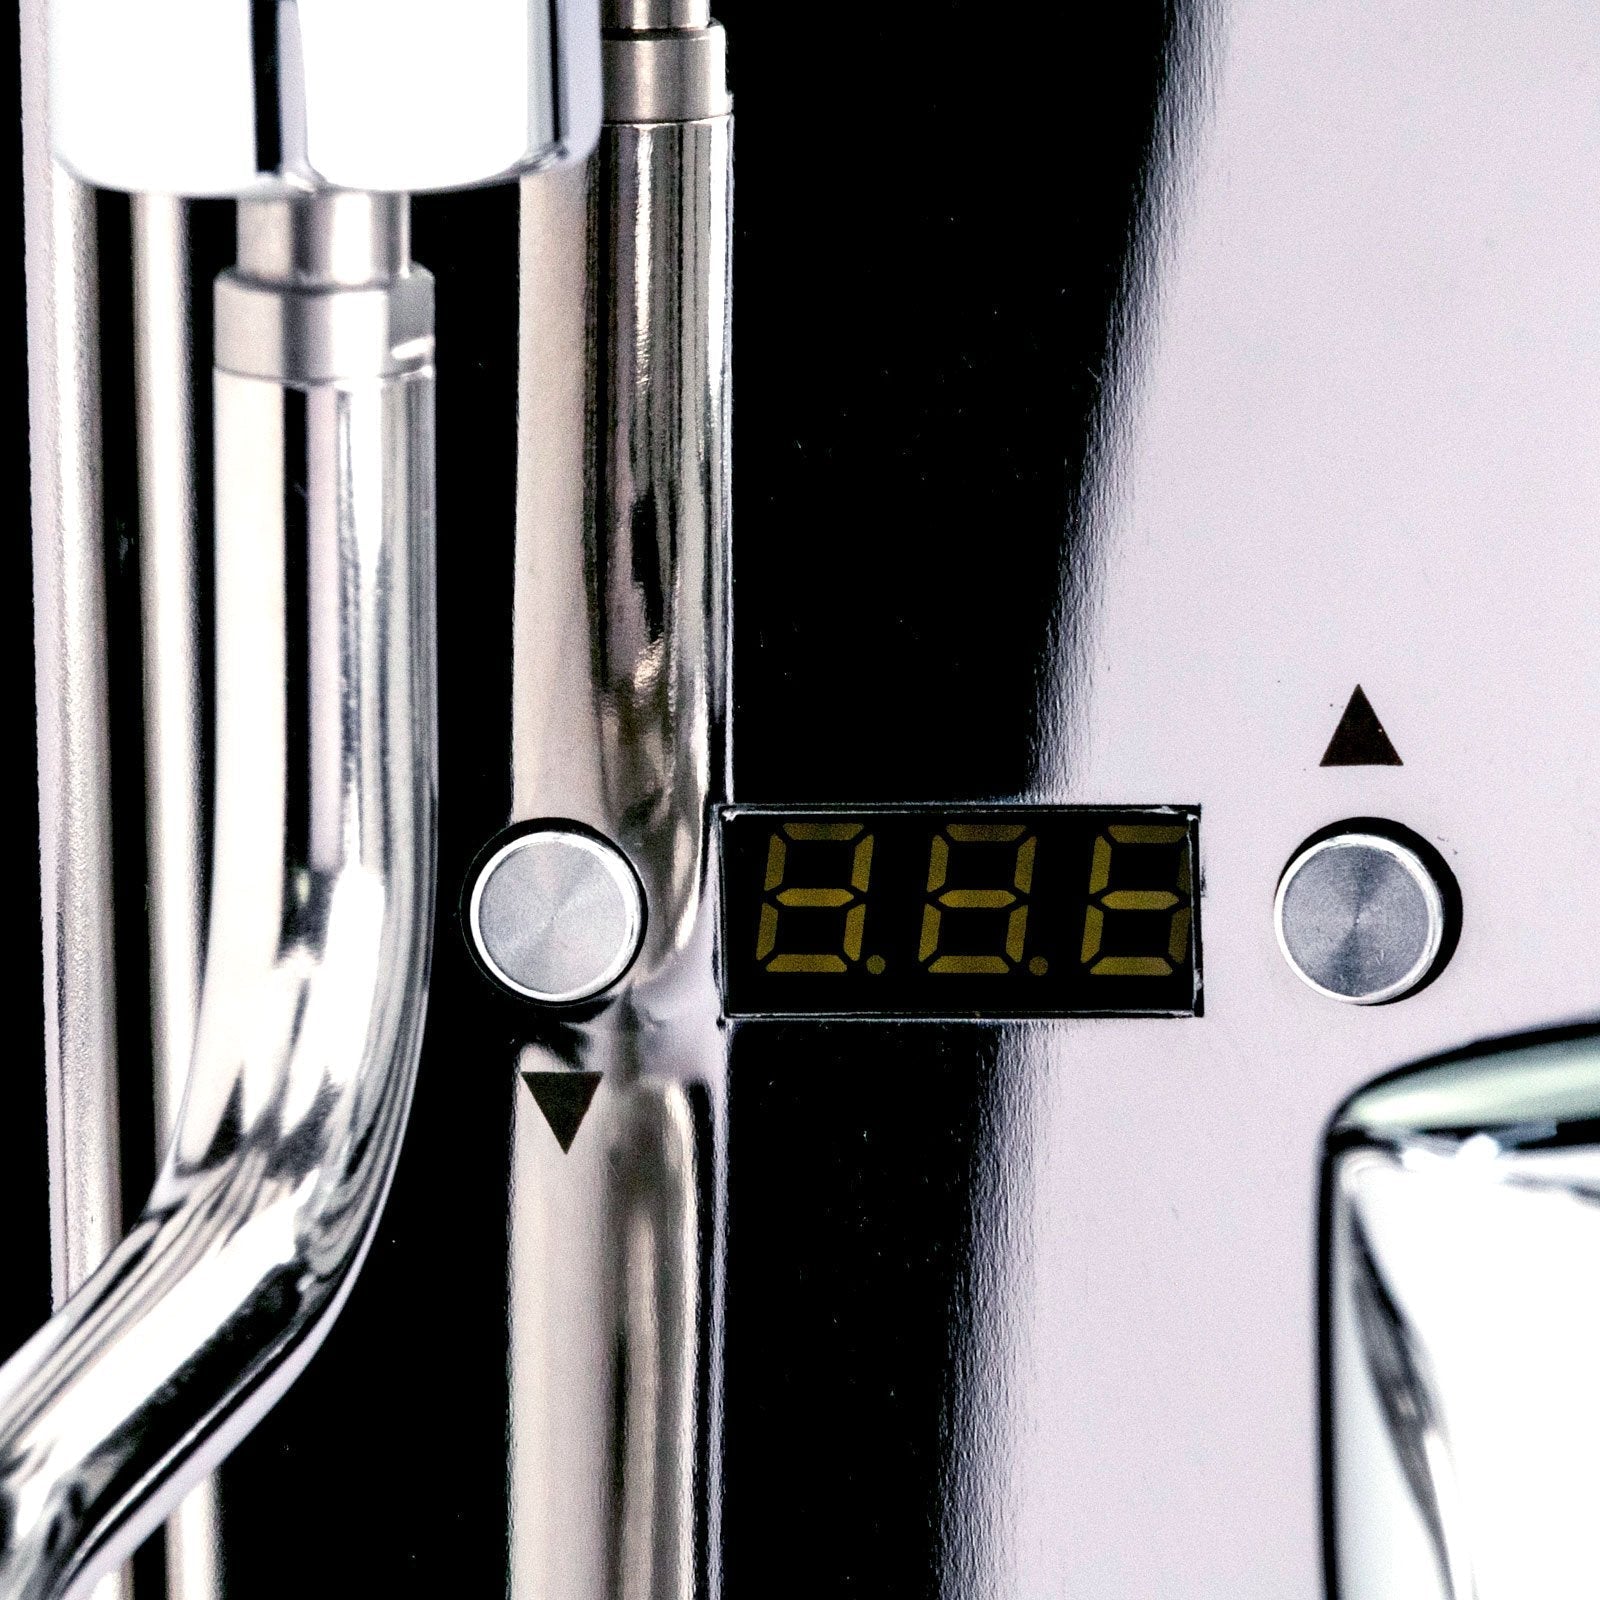 LUCCA X58 Espresso Machine with Flow Control